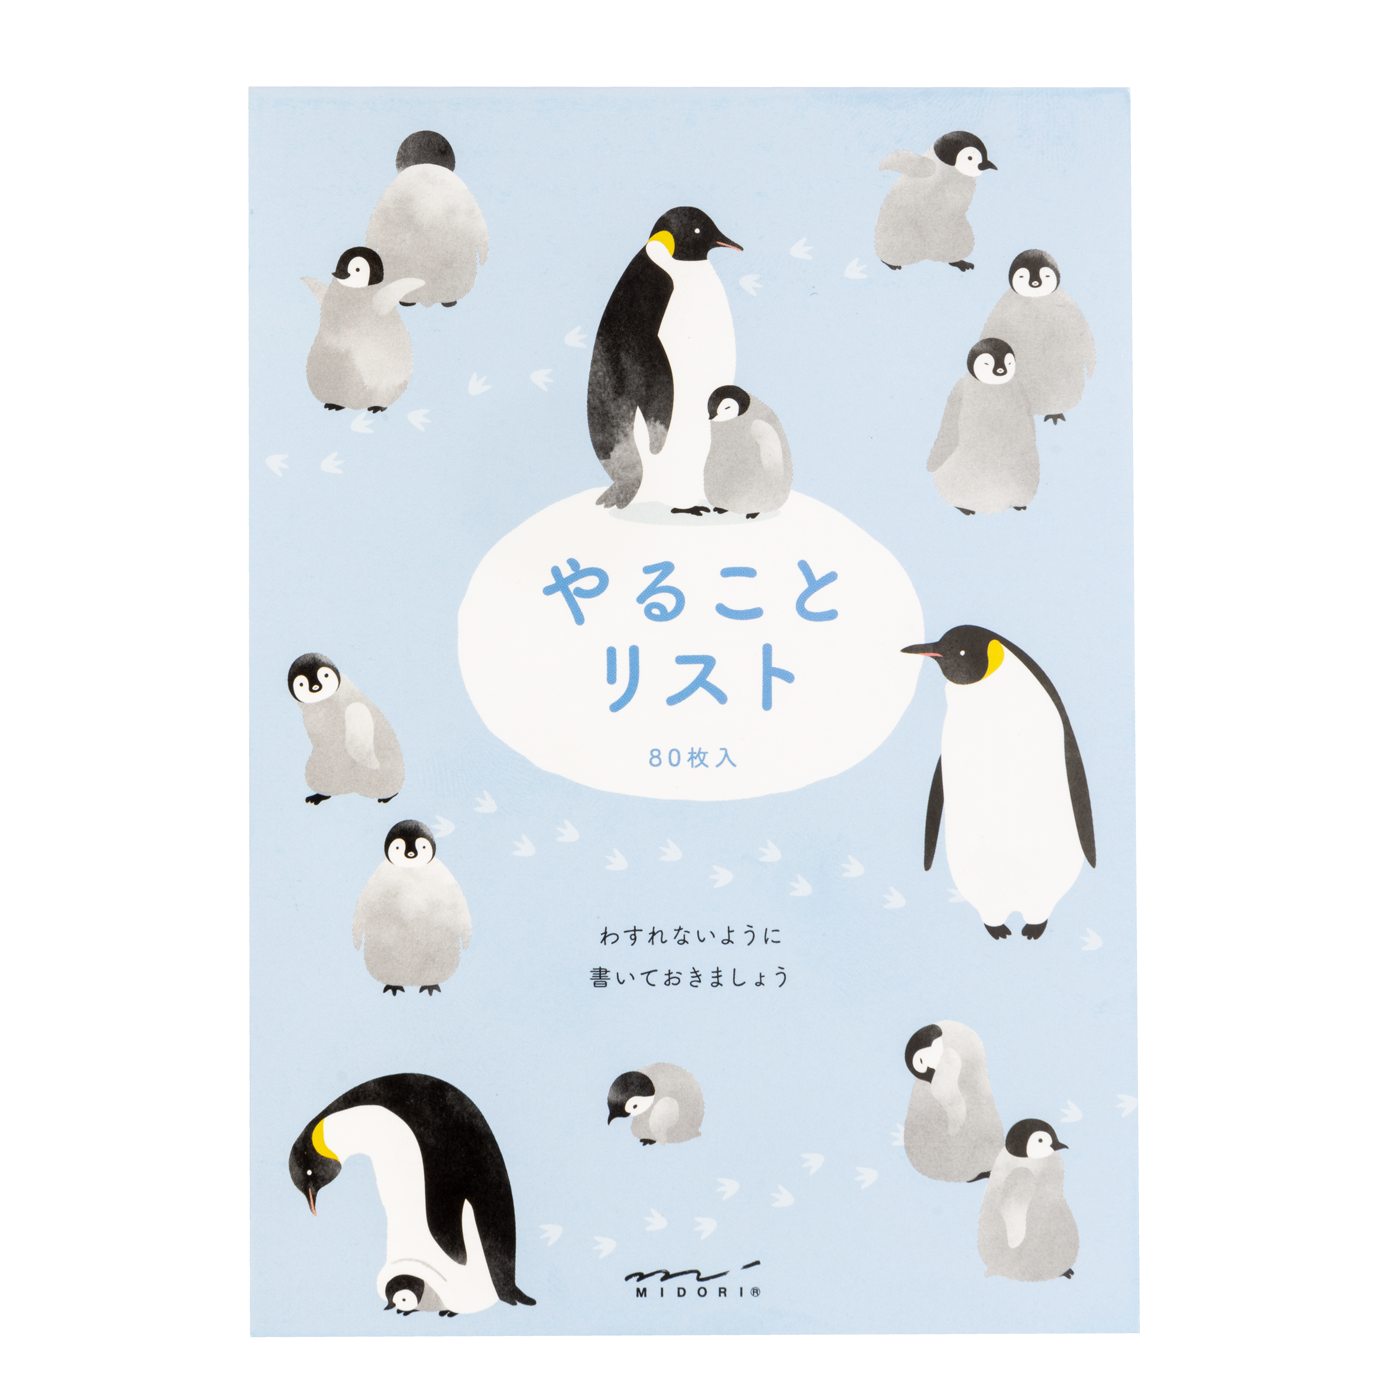 Midori Memo Pad - To Do List - Penguin